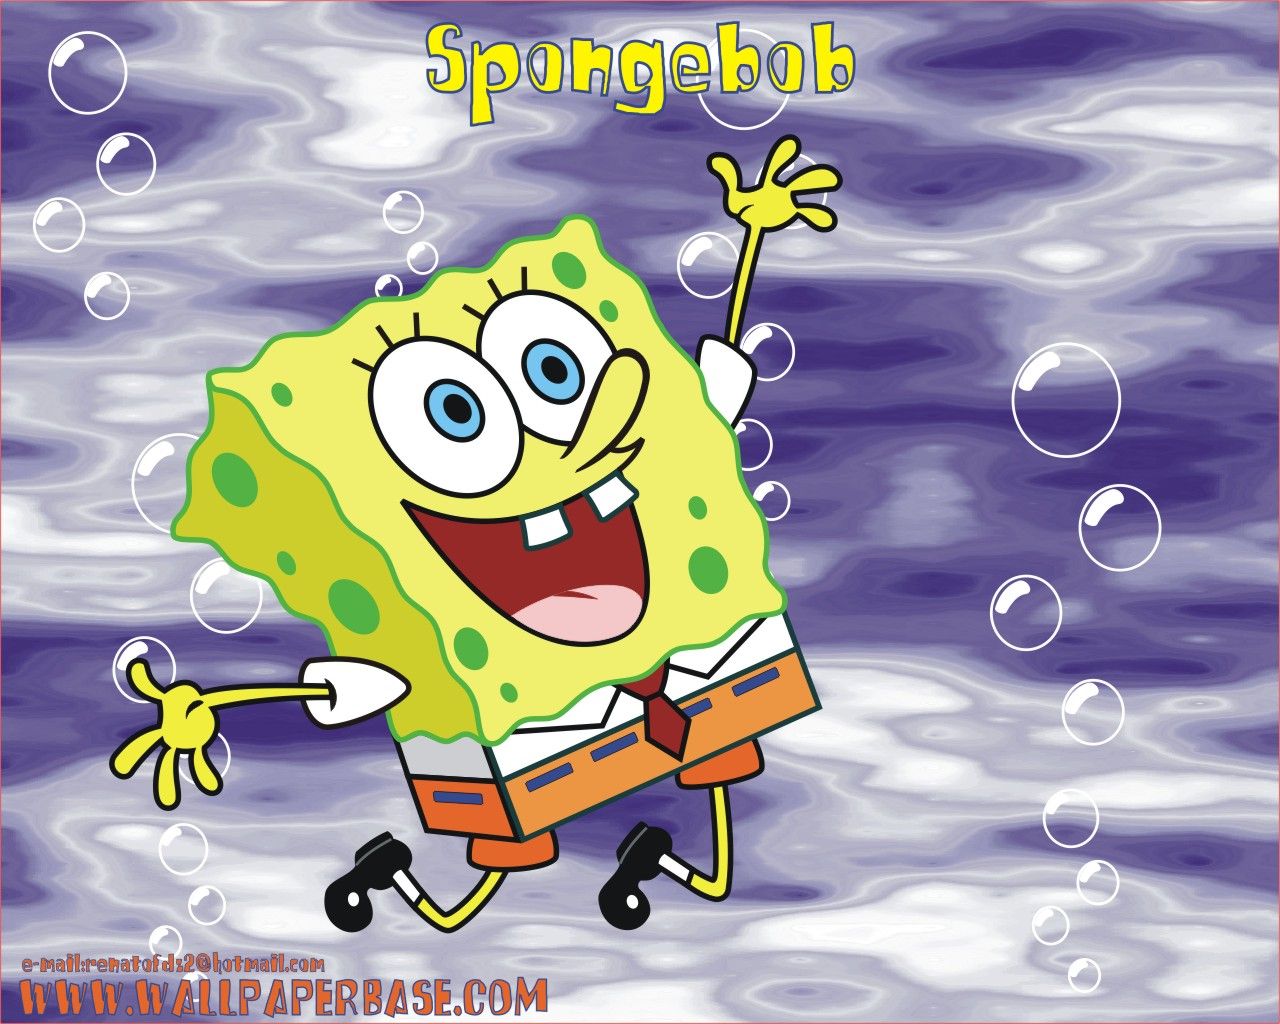 Spongebob Wallpaper - Spongebob Squarepants Wallpaper (33184563 ...